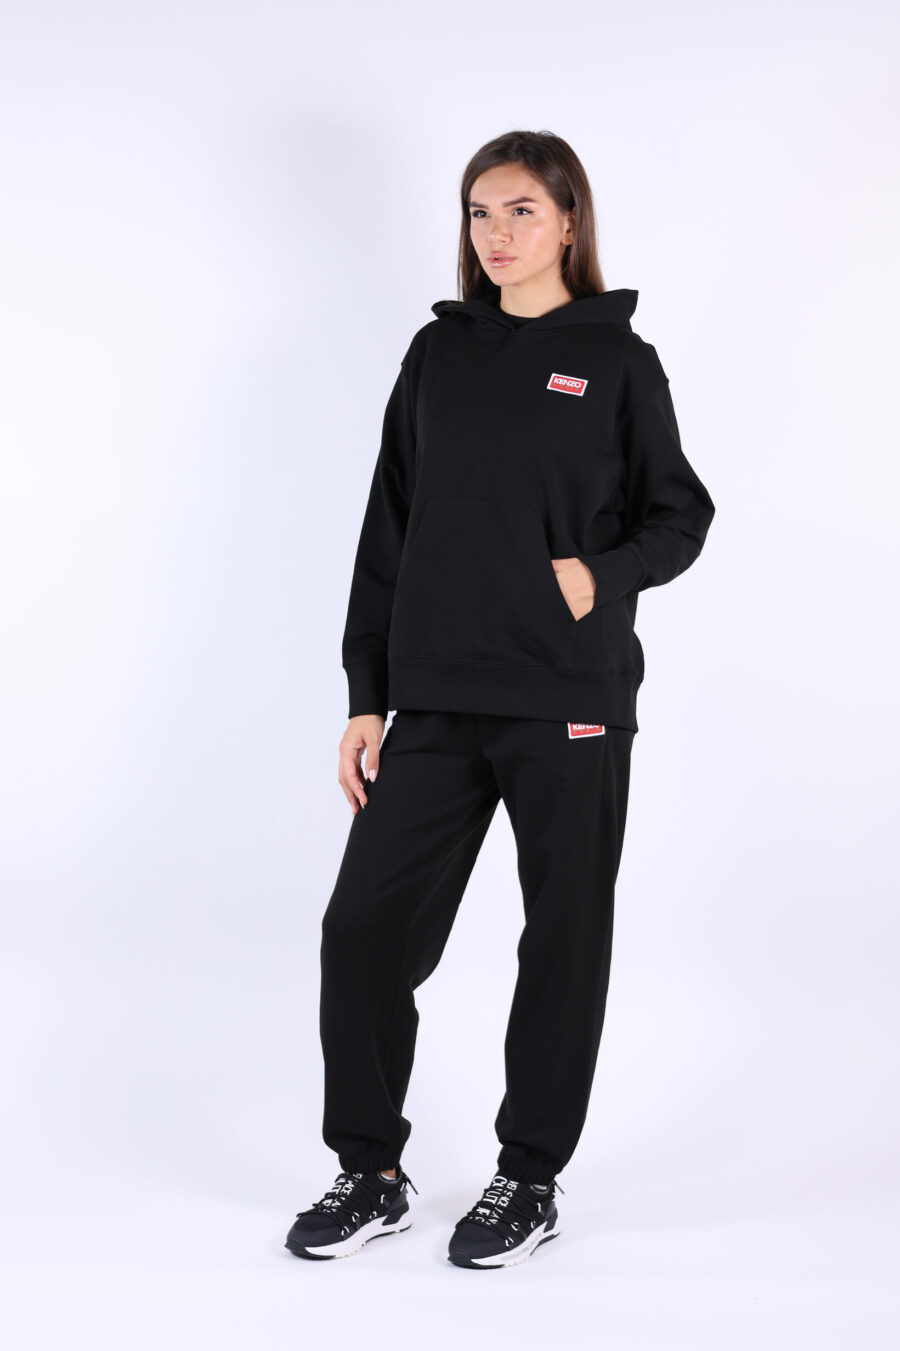 Oversize black hooded sweatshirt with "kenzo paris" logo - 361223051567301578